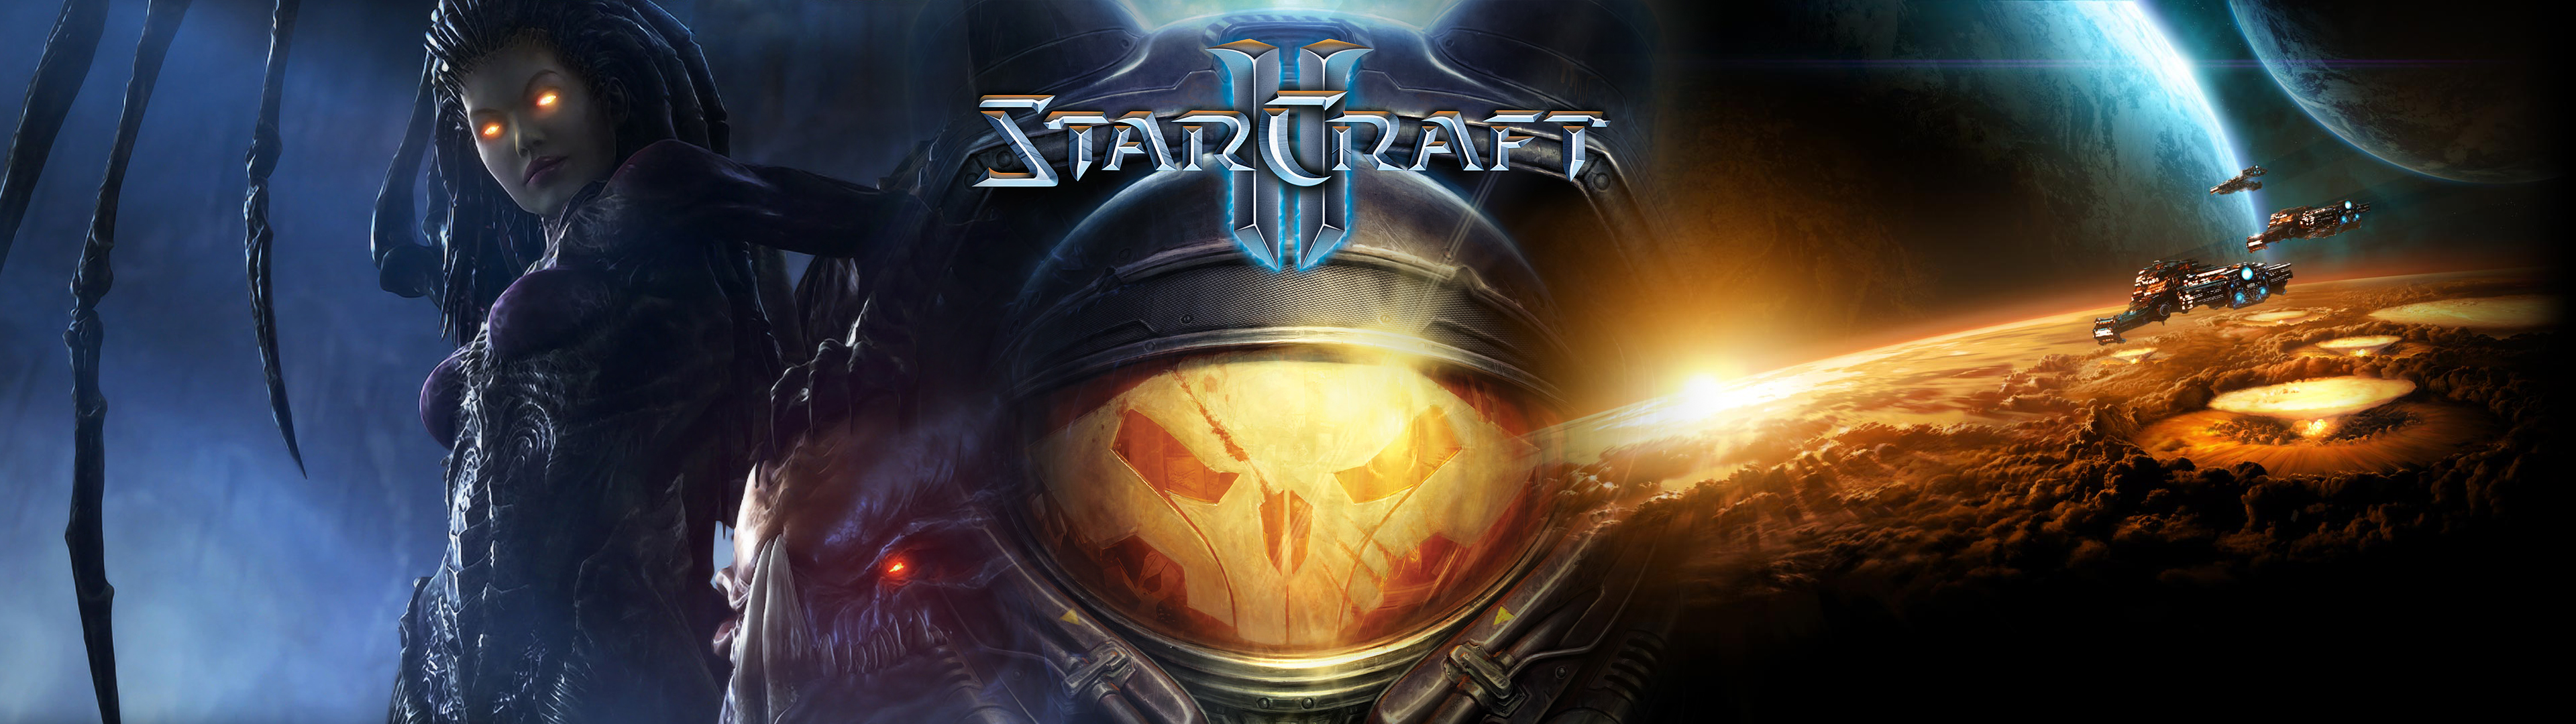 Wallpaper - Starcraft Ii Game Poster - HD Wallpaper 